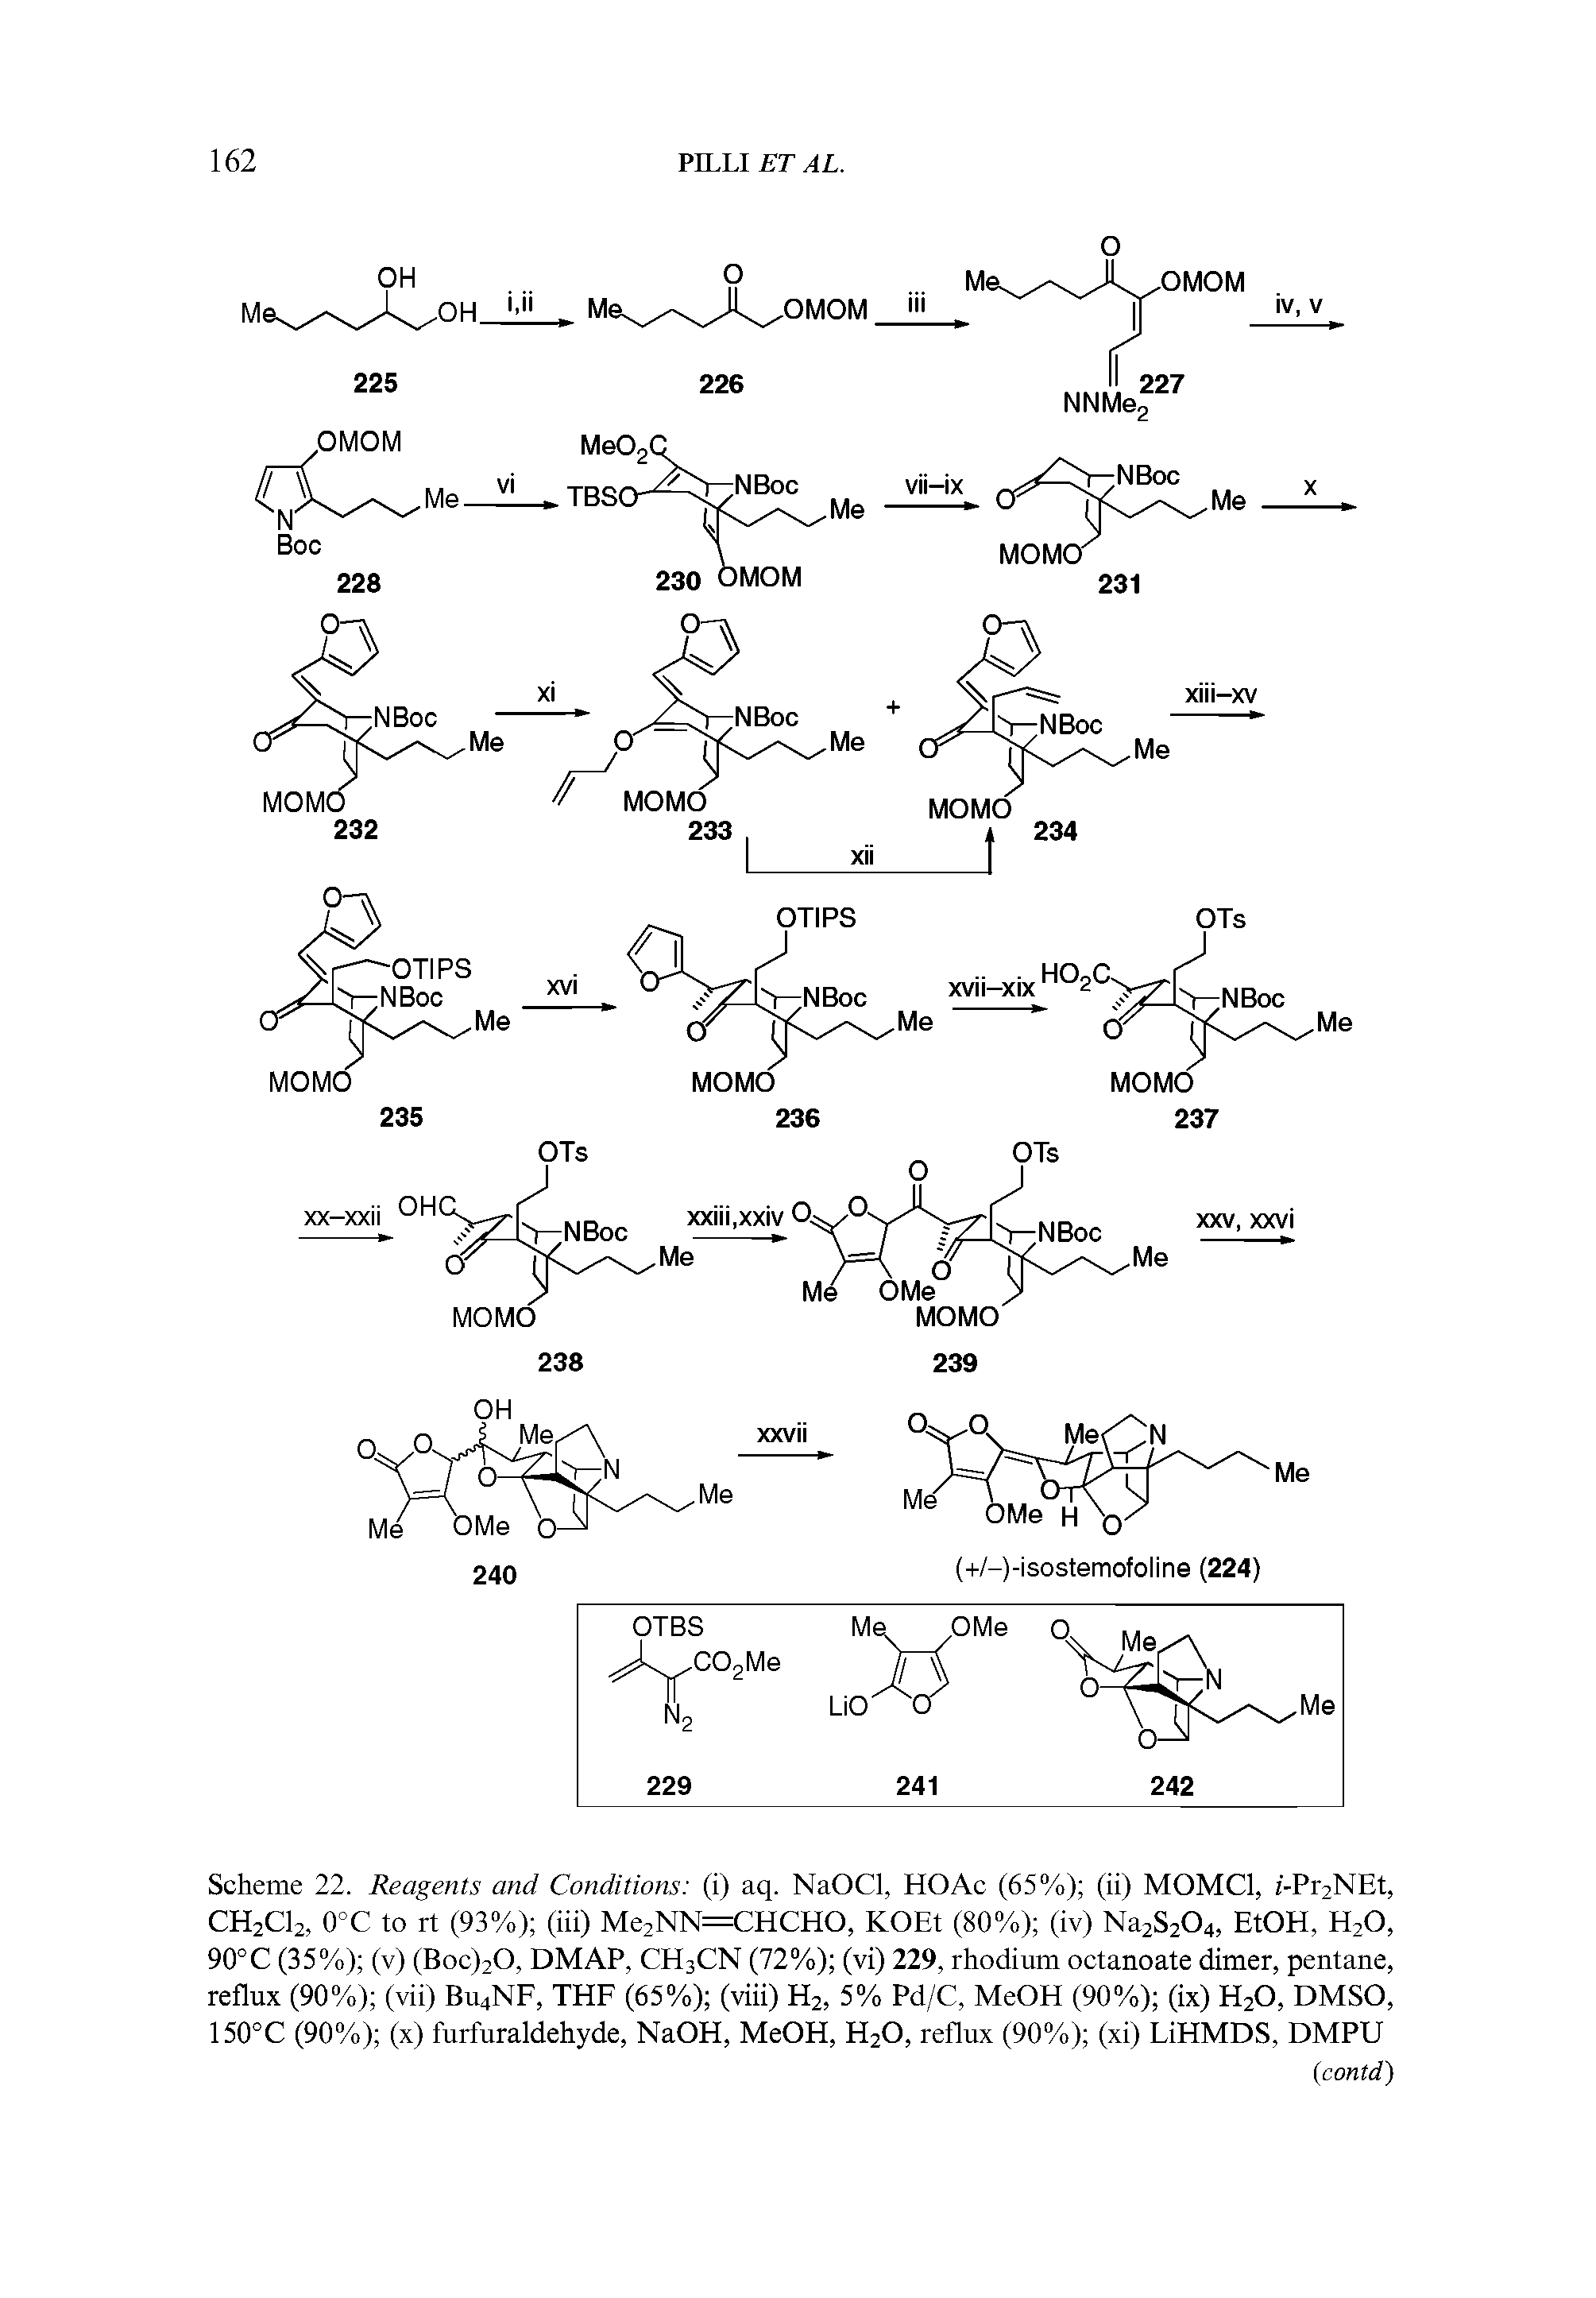 Scheme 22. Reagents and Conditions (i) aq. NaOCl, HOAc (65%) (ii) MOMCl, /-Pr2NEt, CH2CI2, 0°C to rt (93%) (iii) Me2NN=CHCHO, KOEt (80%) (iv) Na2S204, EtOH, H2O, 90°C (35%) (v) (Boc)20, DMAP, CH3CN (72%) (vi) 229, rhodium octanoate dimer, pentane, reflux (90%) (vii) BU4NF, THE (65%) (viii) H2, 5% Pd/C, MeOH (90%) (ix) H2O, DMSO, 150°C (90%) (x) furfuraldehyde, NaOH, MeOH, H2O, reflux (90%) (xi) LiHMDS, DMPU...